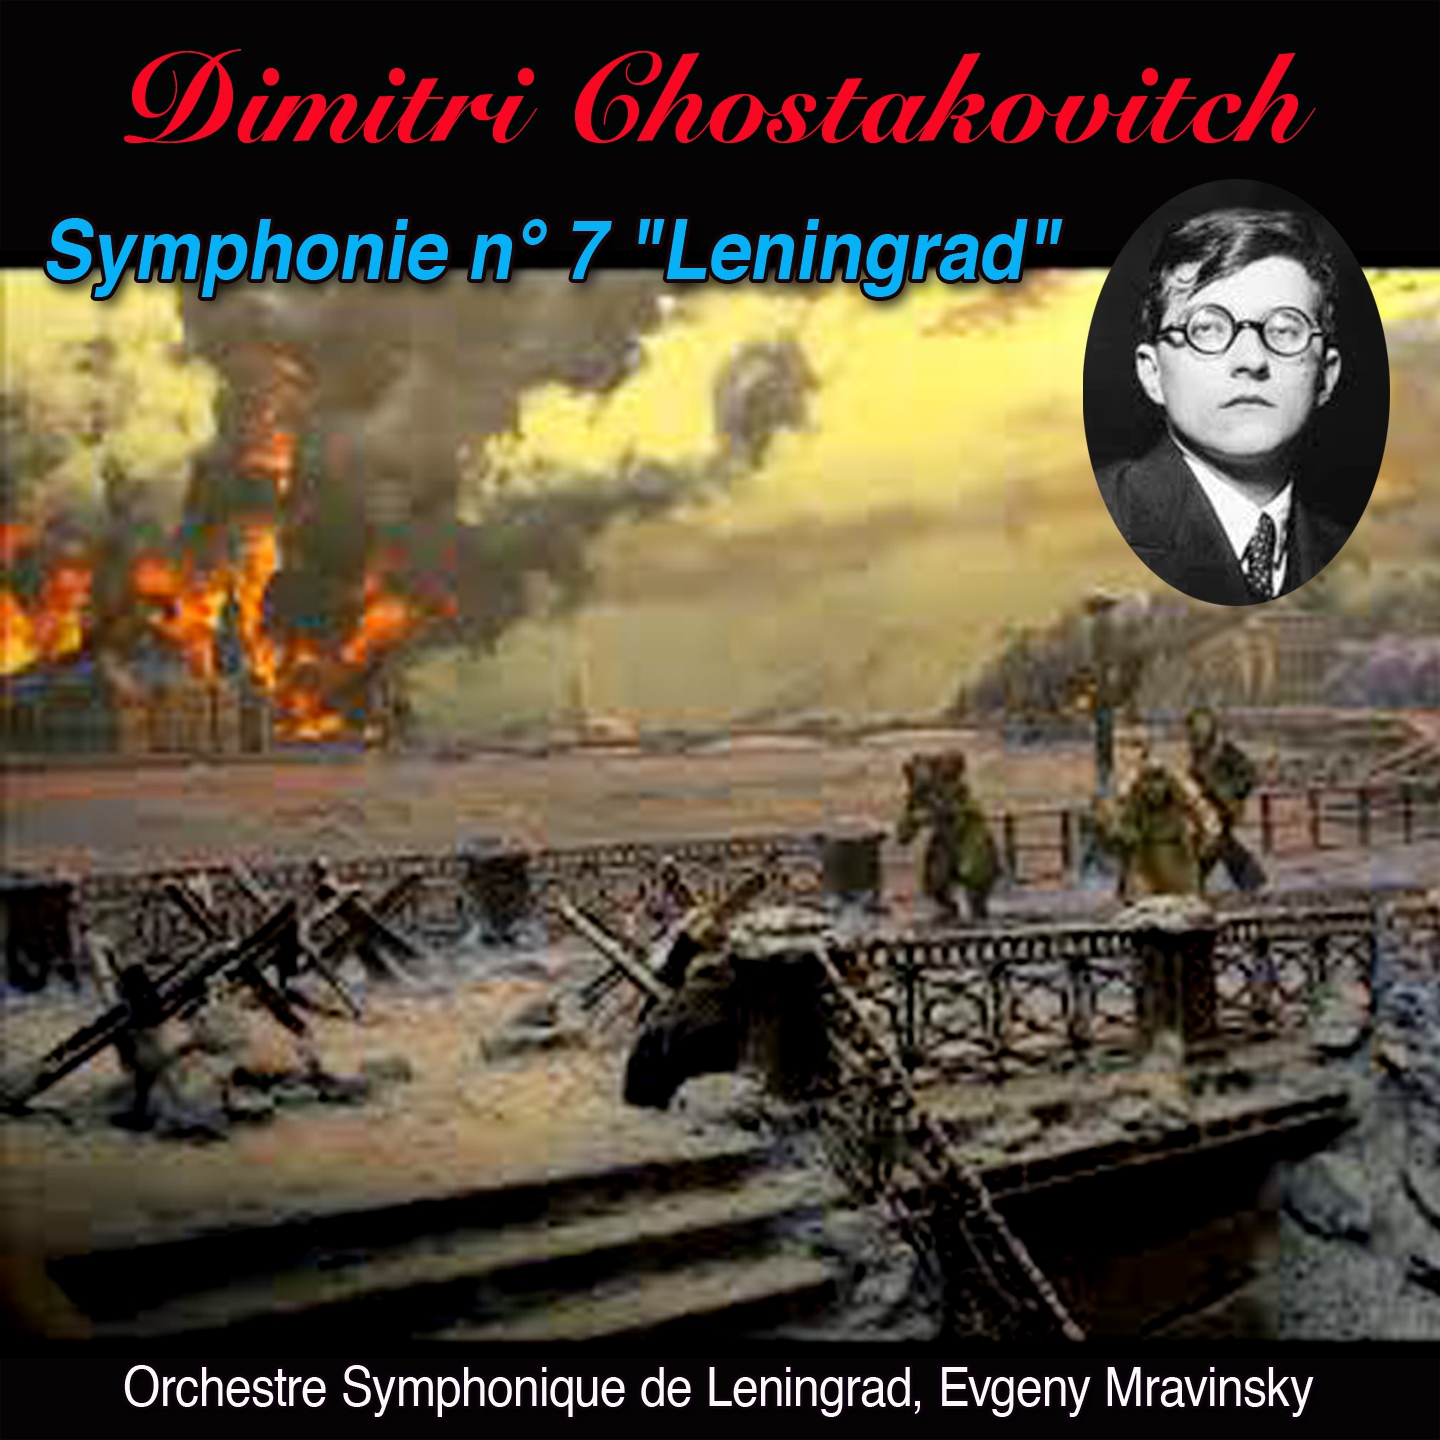 Leningrad allegro non troppo (Symphonie n° 7 op. 60 en ut majeur "Leningrad")